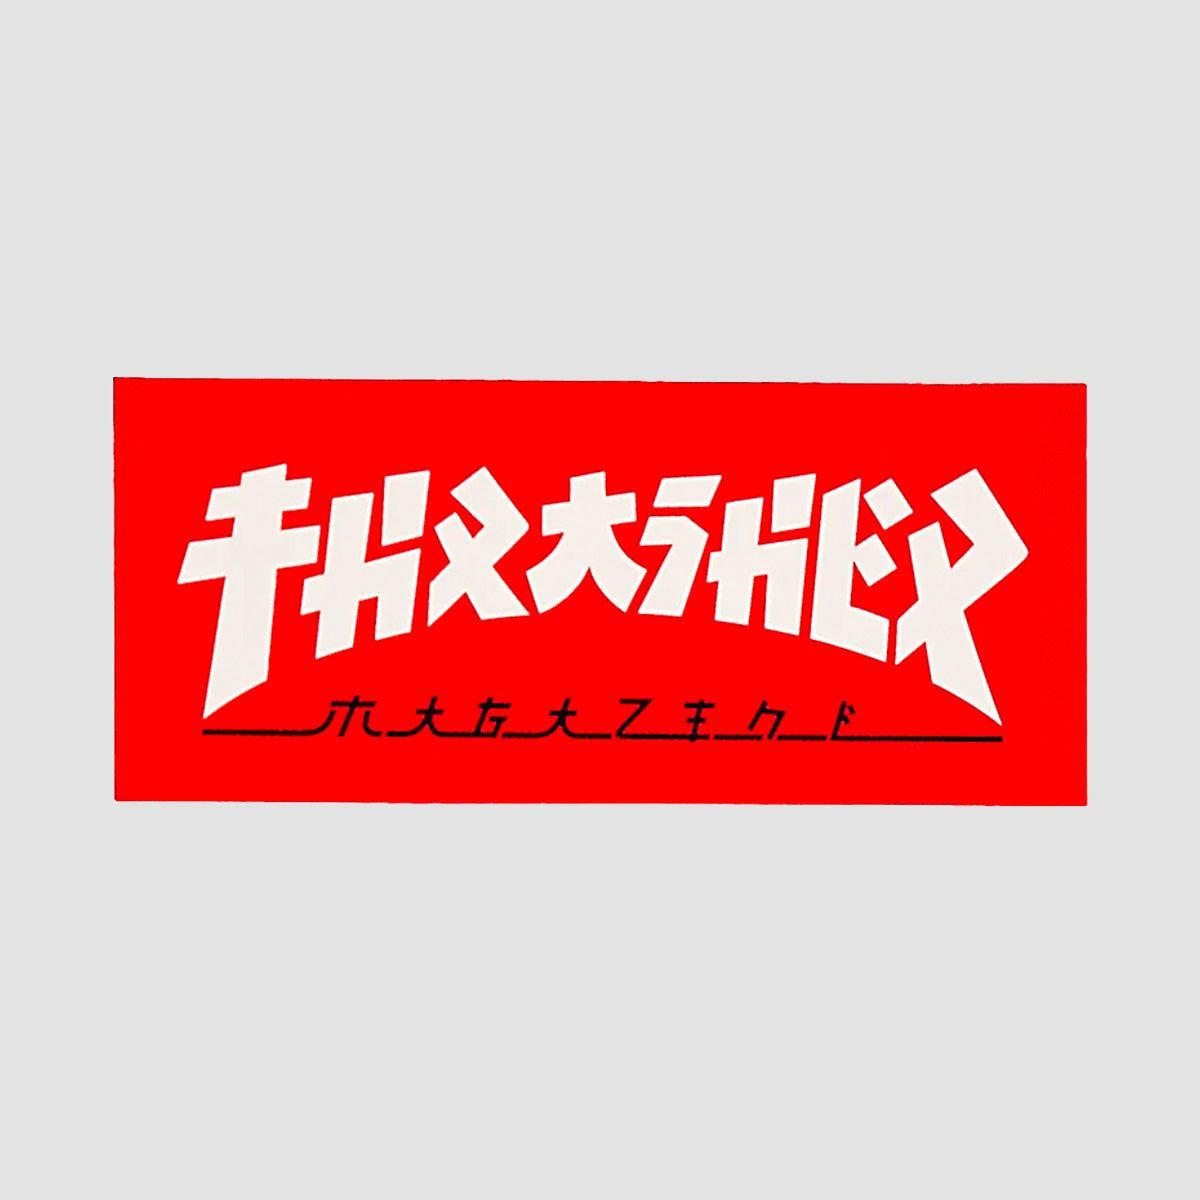 Thrasher Godzilla Rectangle Sticker White/Red 150x65mm